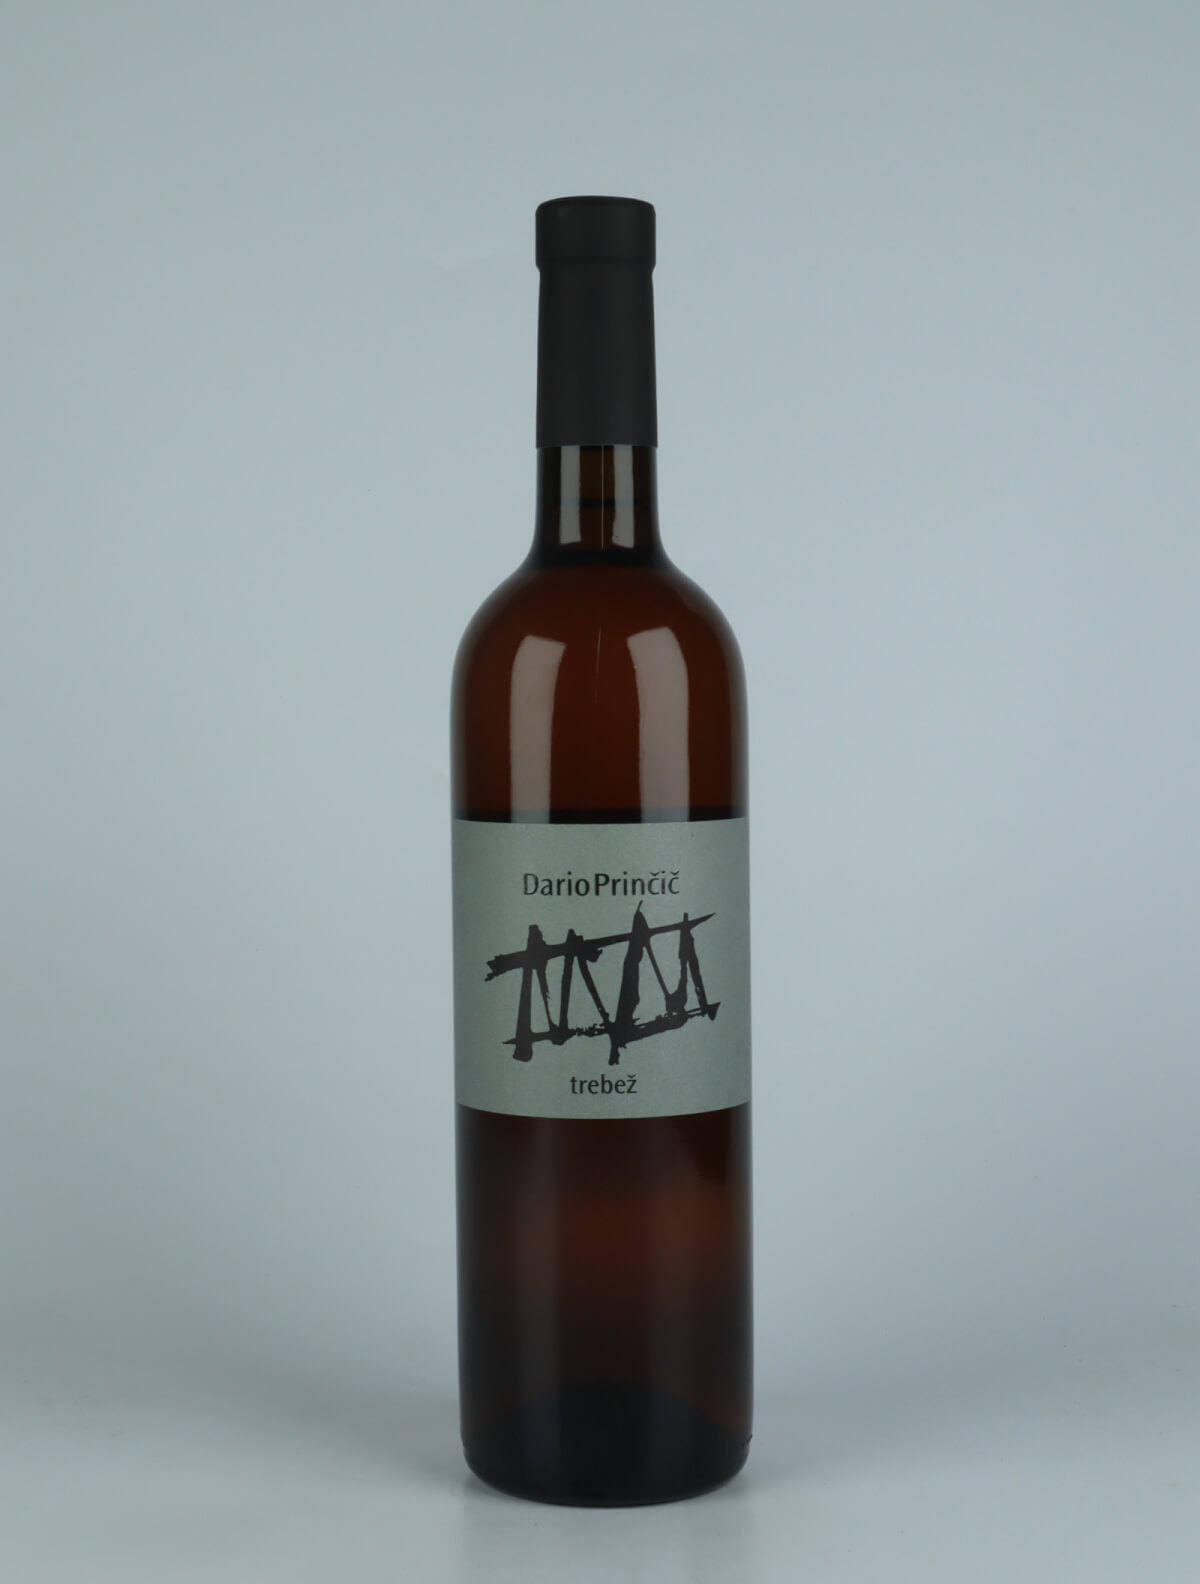 A bottle 2020 Bianco Trebez Orange wine from Dario Princic, Friuli in Italy